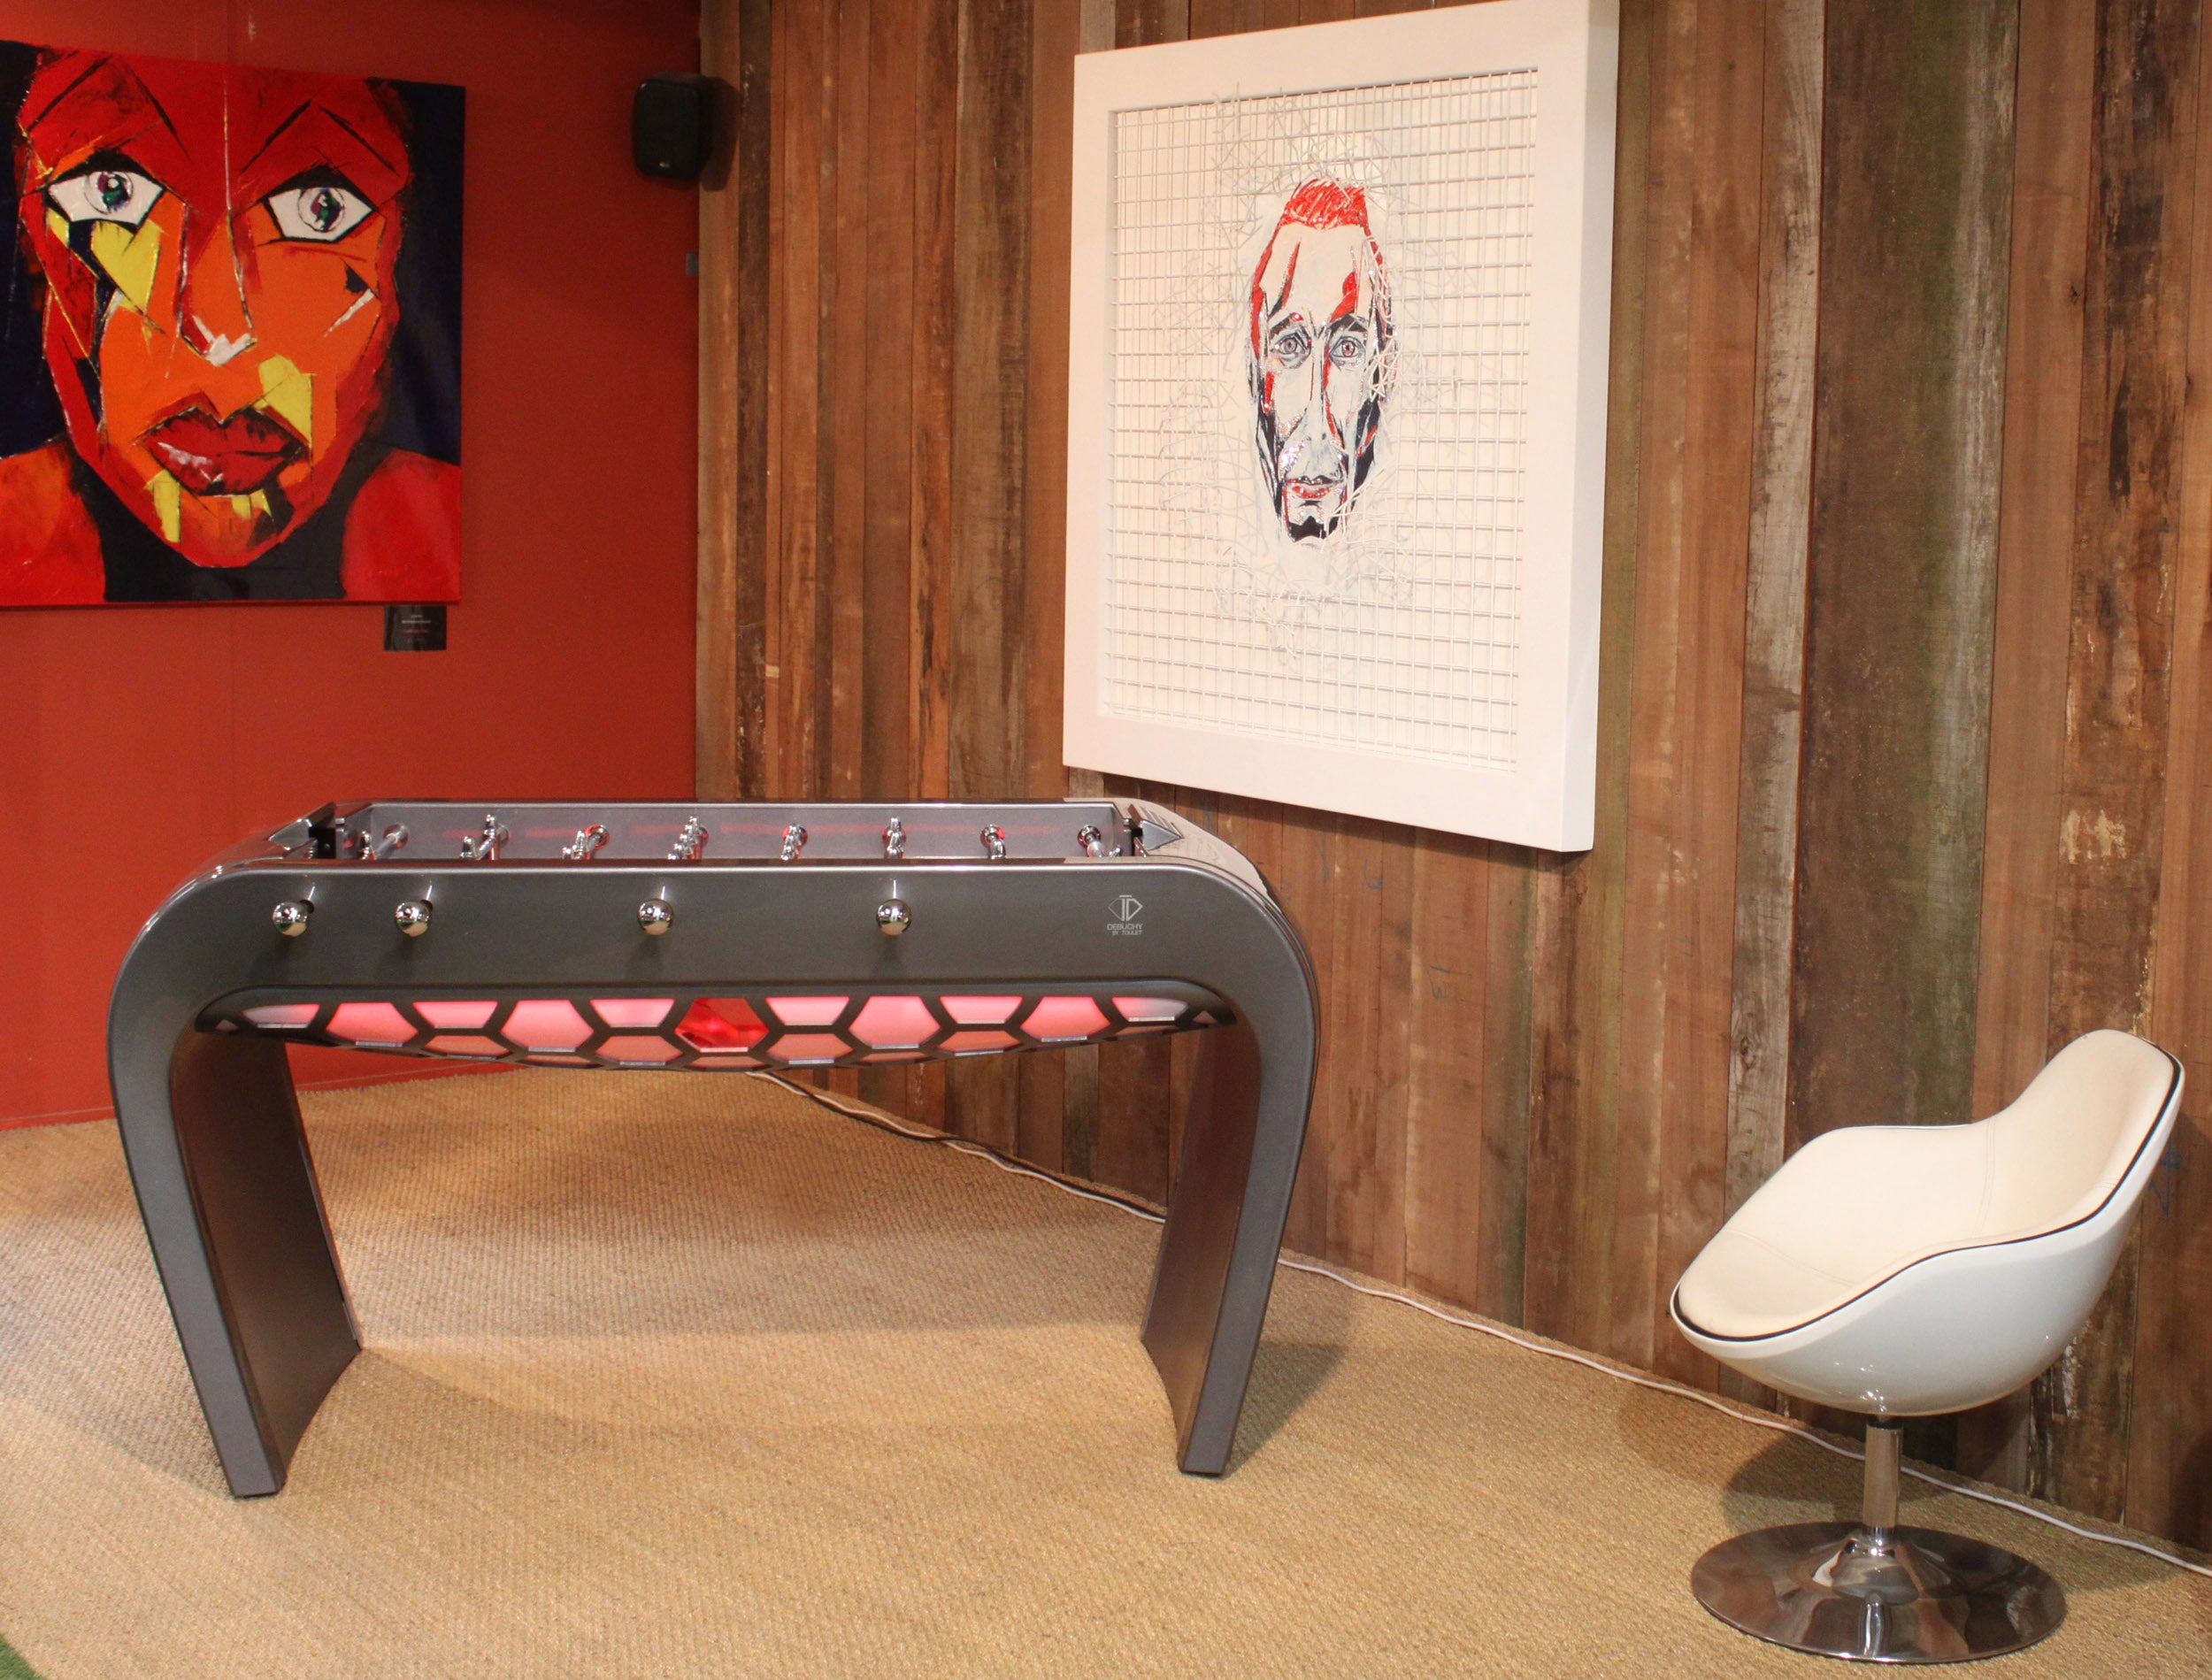 The Blackball - Design Foosball table - Debuchy by TOULET - Debuchy by Toulet - luxebackyard